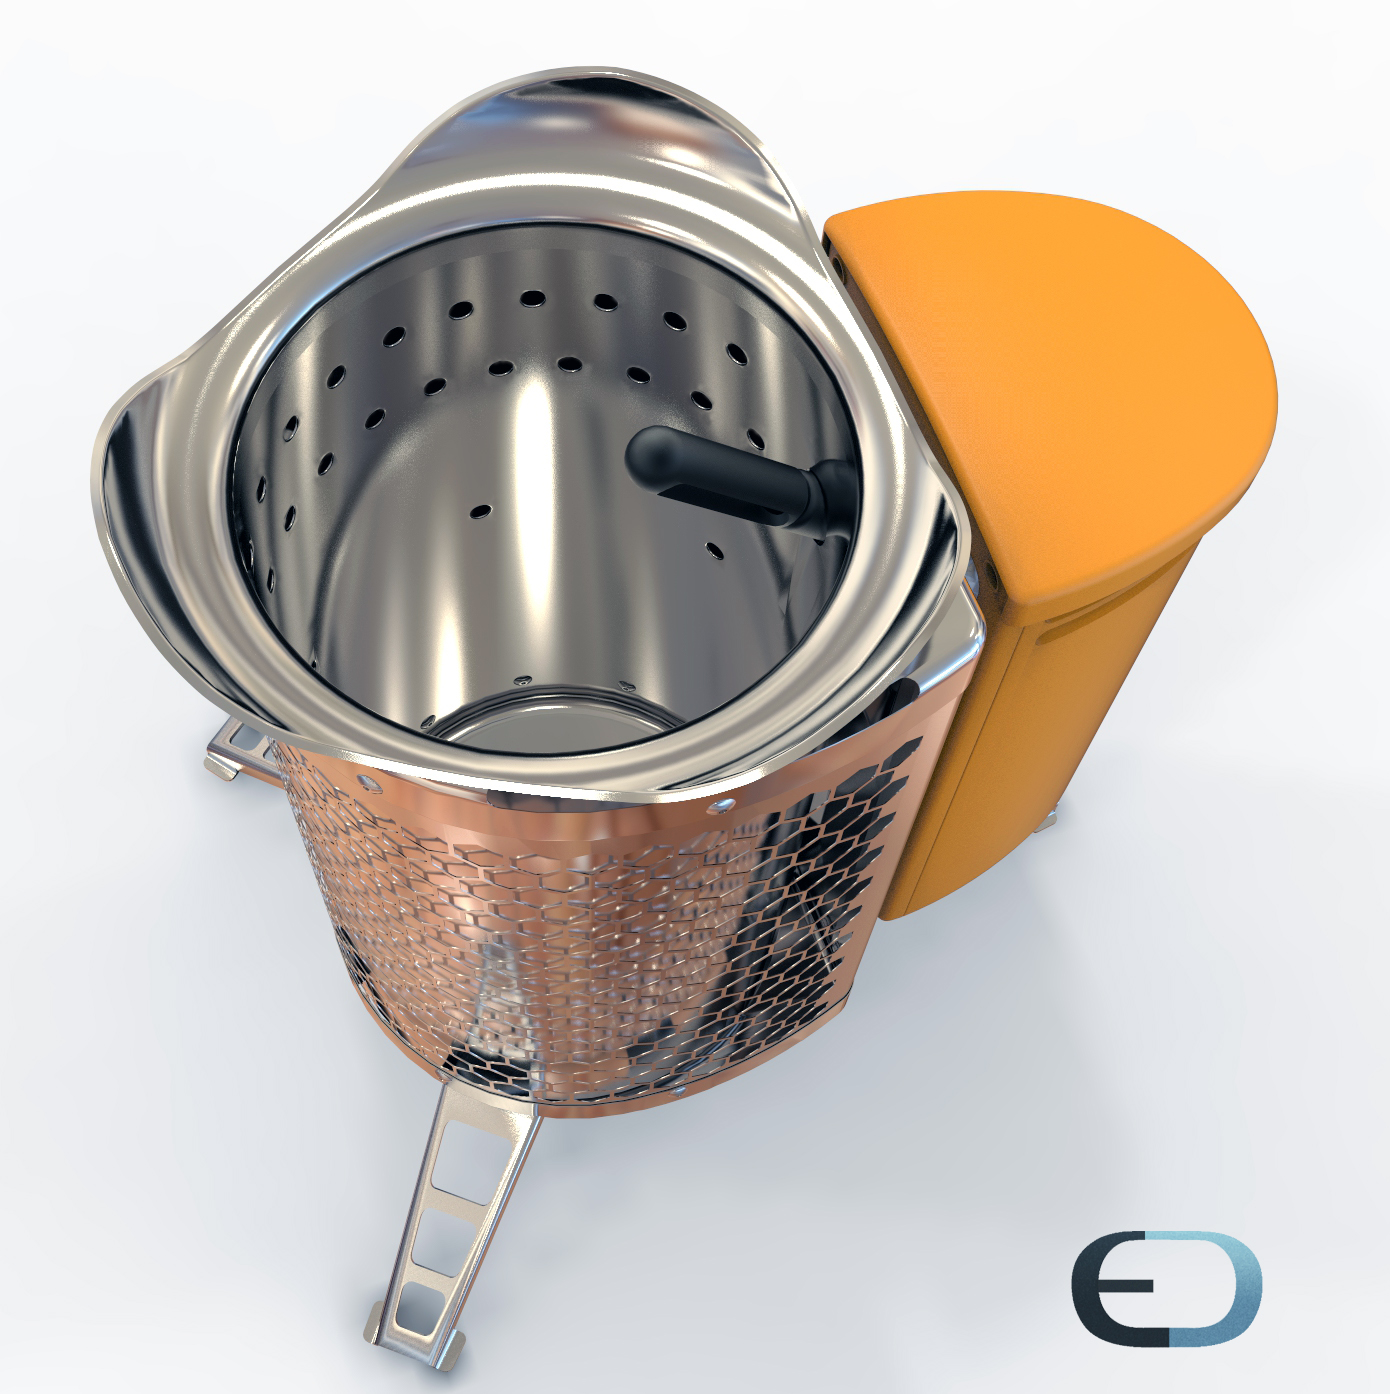 BioLite stove 3a by EliseiDesign.jpg